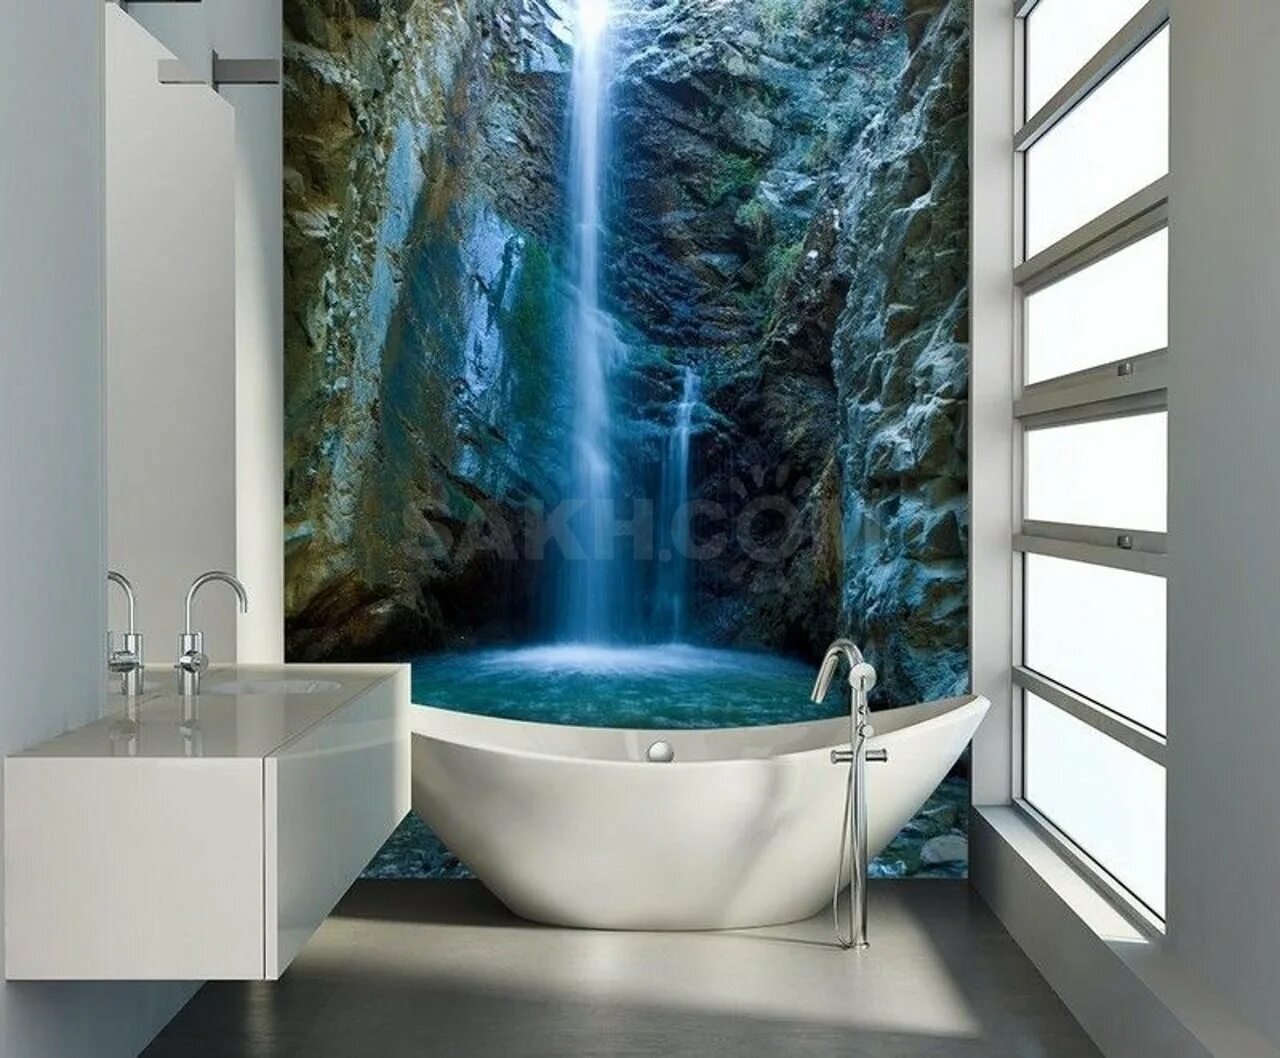 Ванна фотообои. Фотоплитка водопад. Панно в ванную комнату. Ванна в стиле природы. Фотообои в ванной комнате.